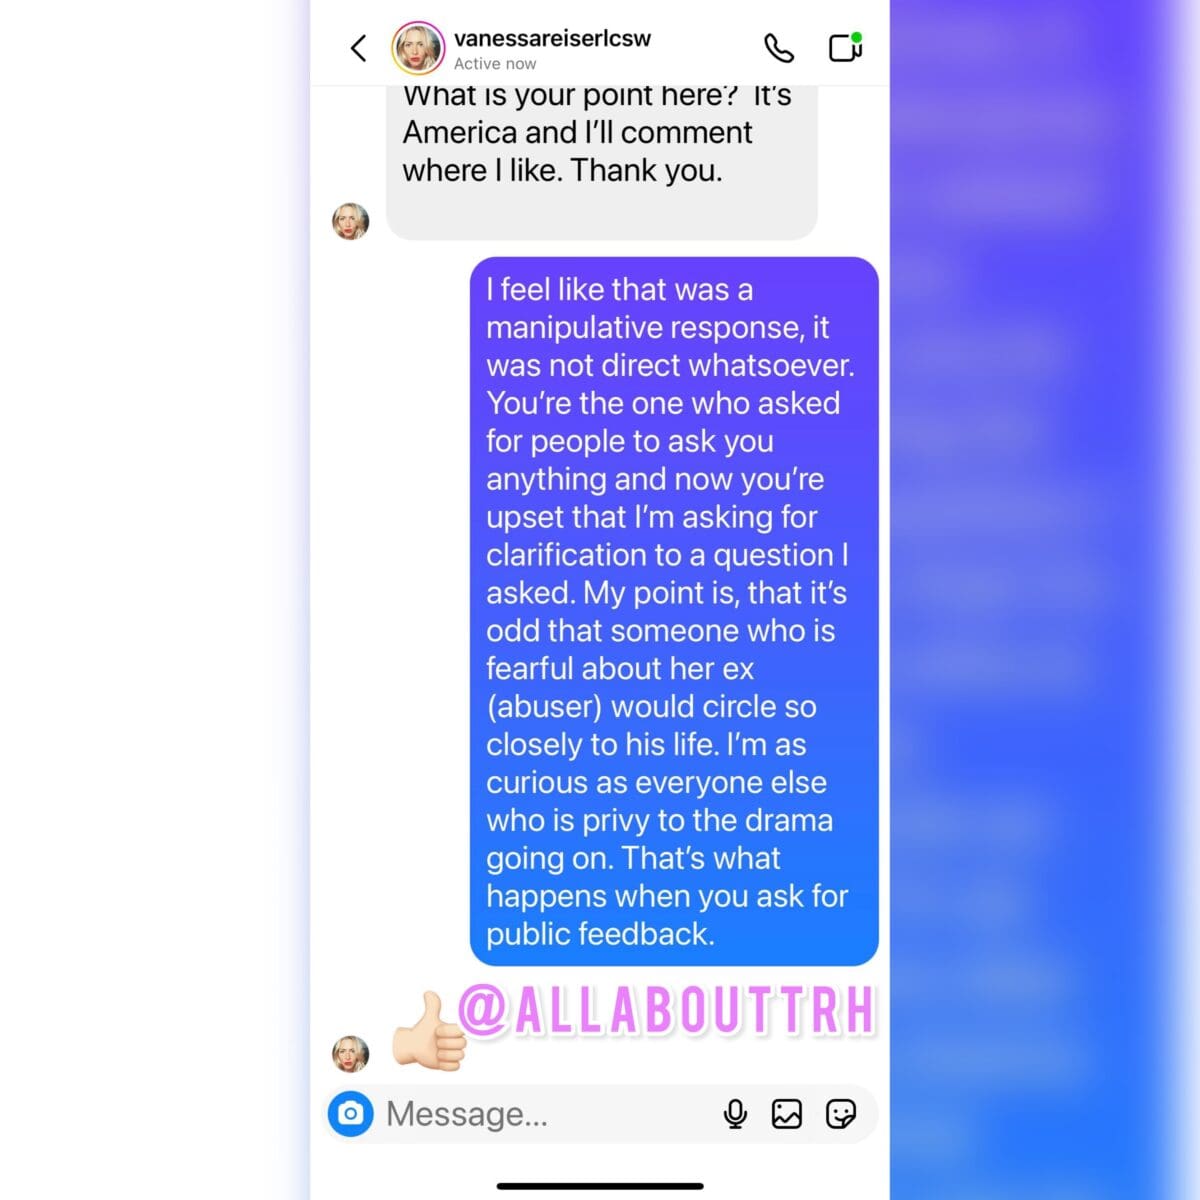 Vanessa Reiser defends commenting on Instagram posts from RHONJ cast